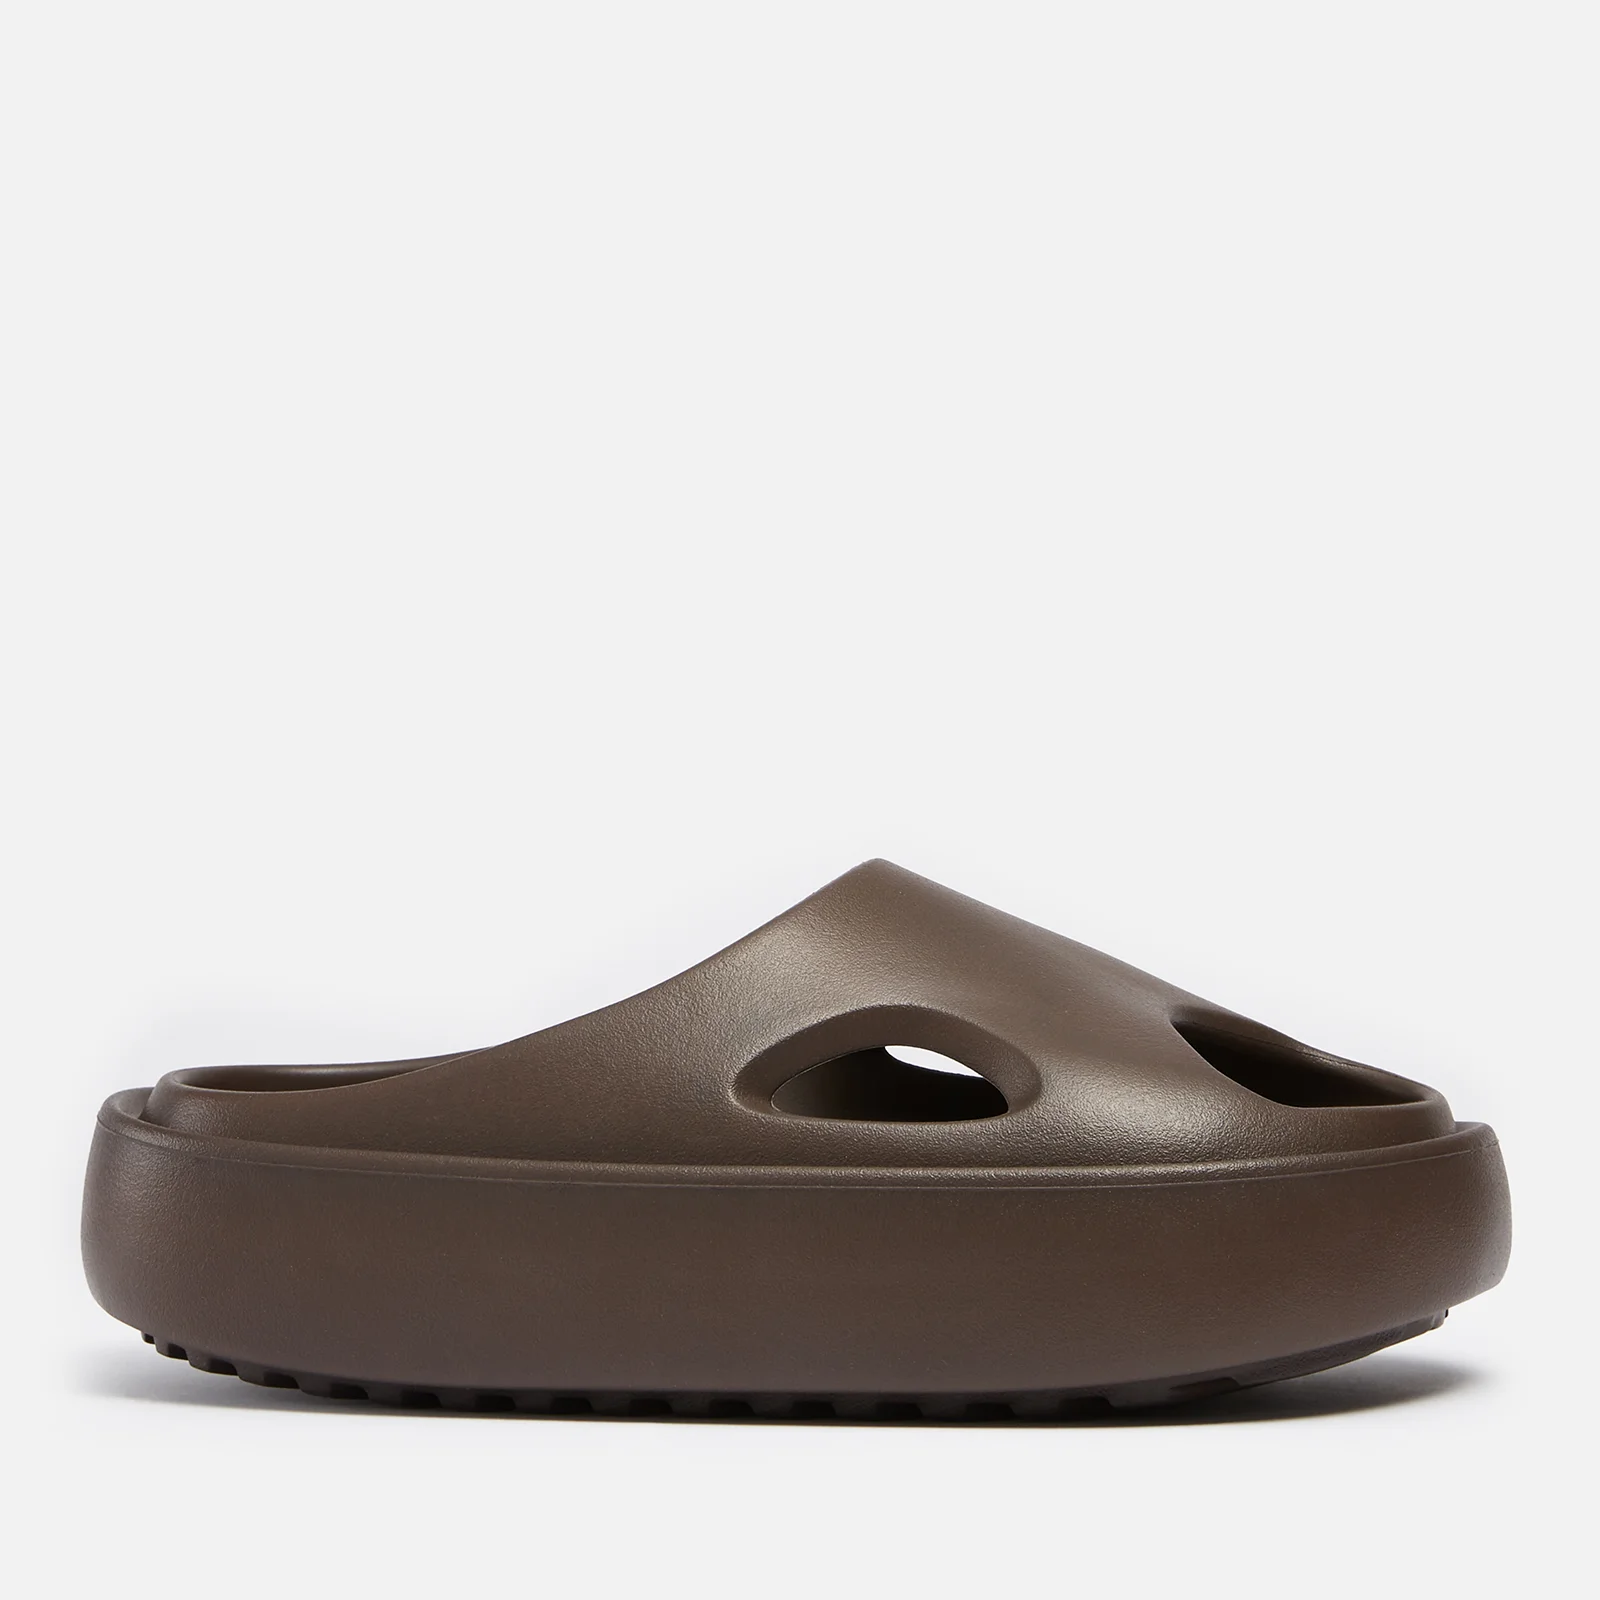 Axel Arigato Women's Magma Mule Sandals - Brown Image 1